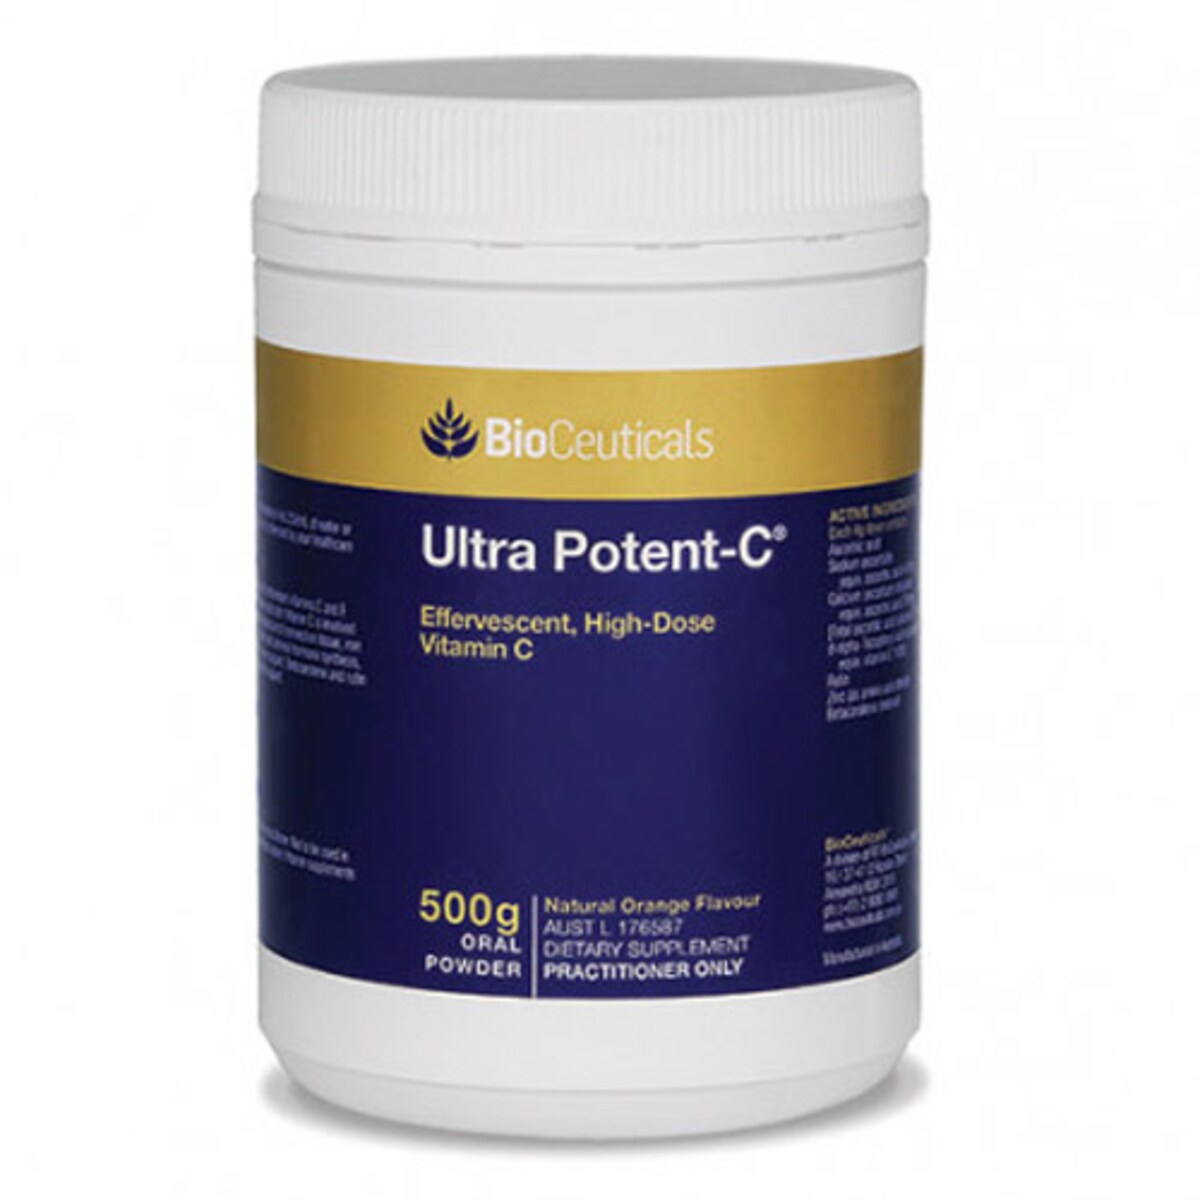 BioCeuticals Ultra Potent-C Oral Powder 500g